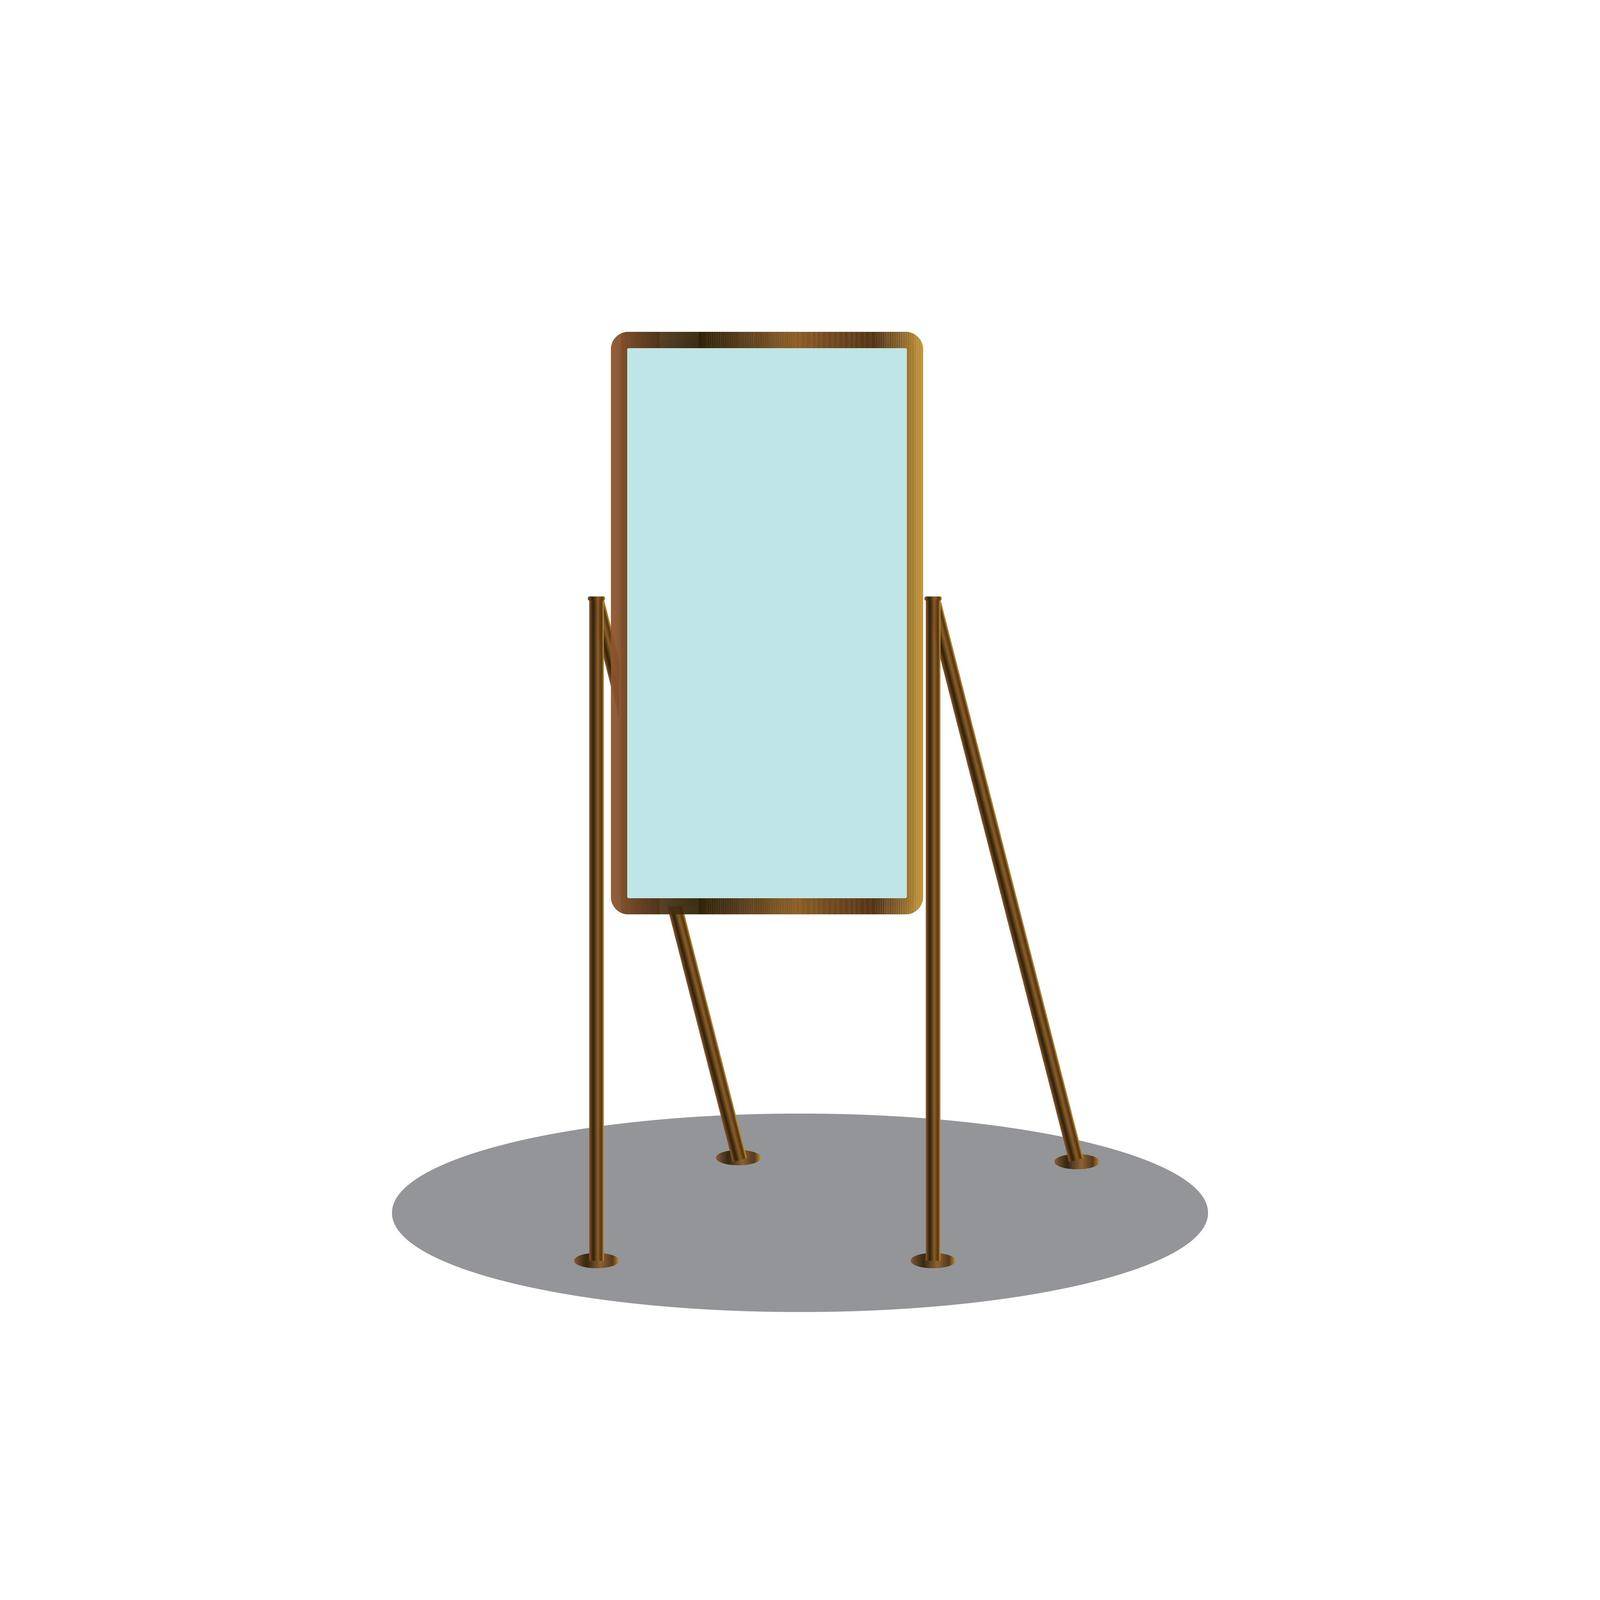 mirror logo by rnking